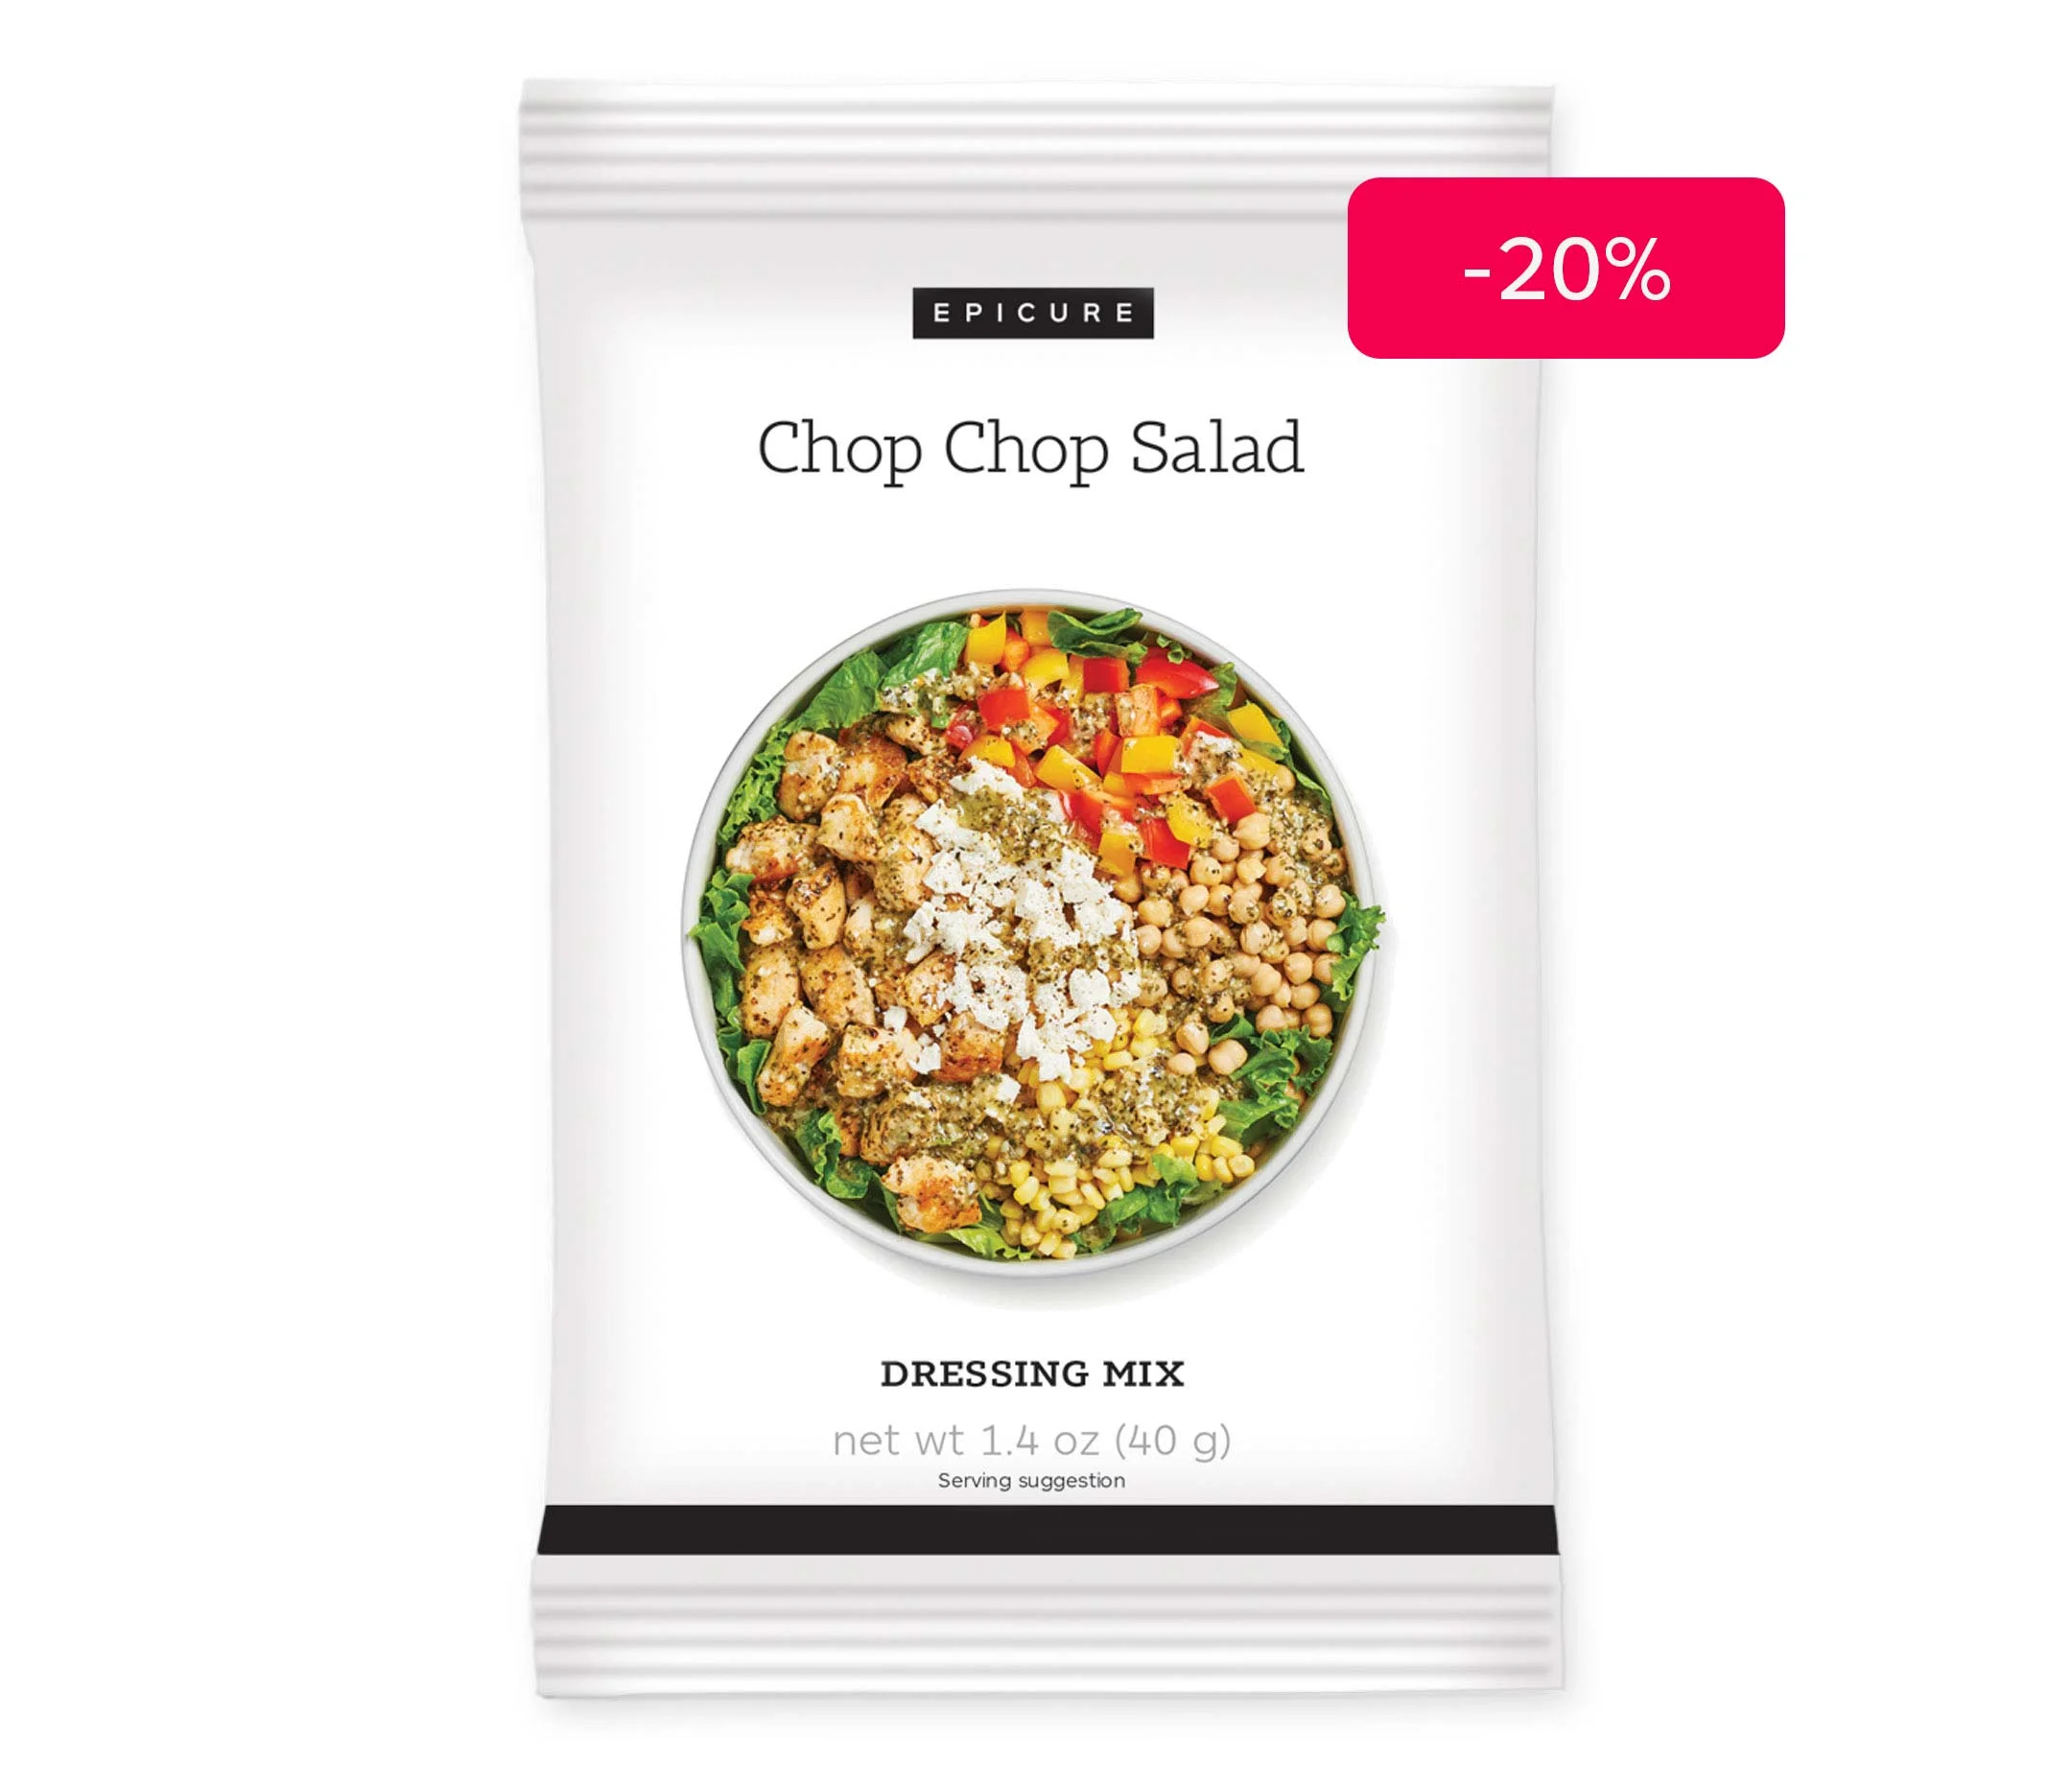 Chop Chop Salad Dressing Mix (Pack of 3)
